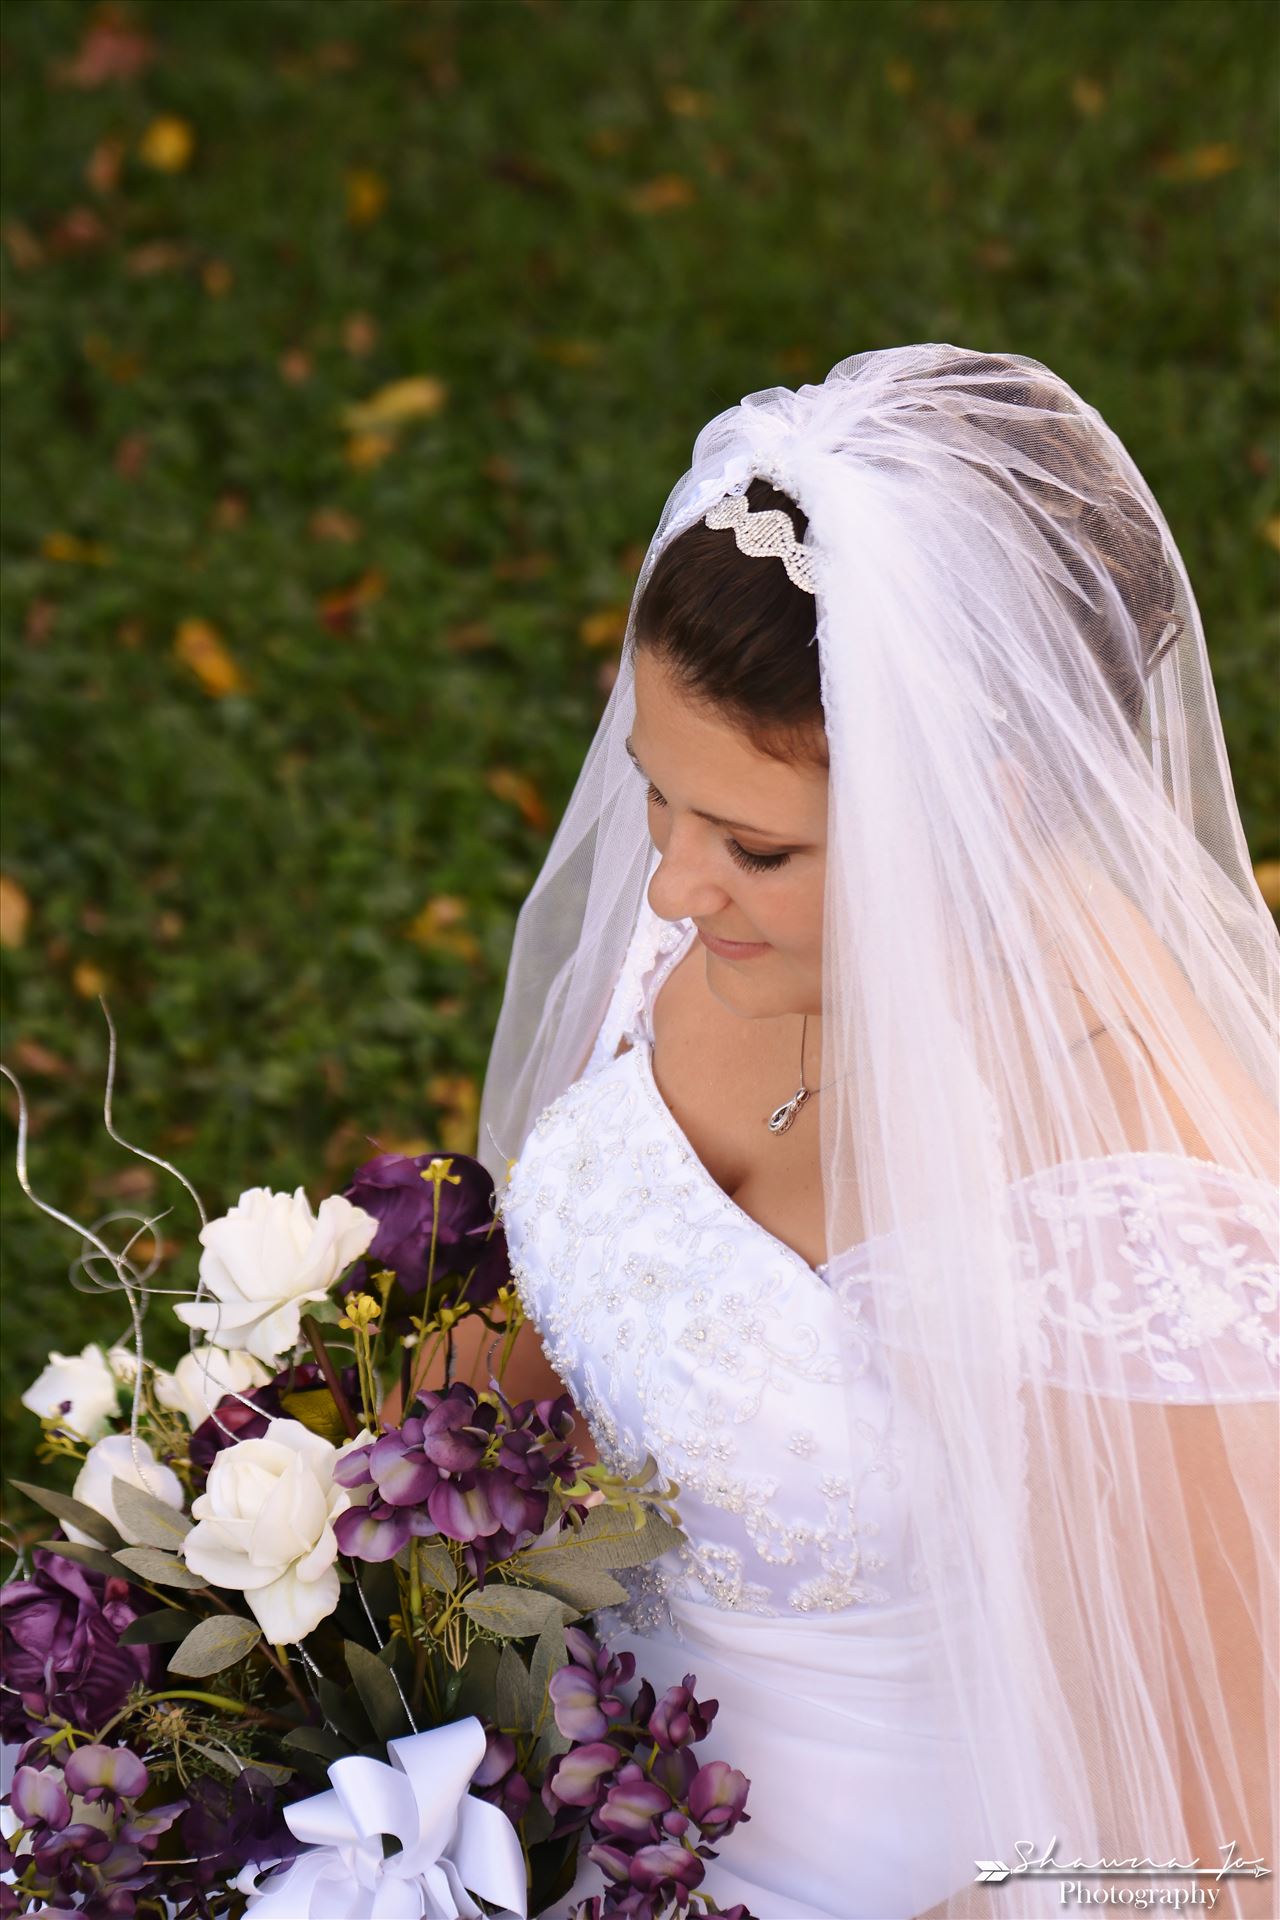 EdwardsWedding1.jpg Alena made one stunning bride by Shawna Jo Photography